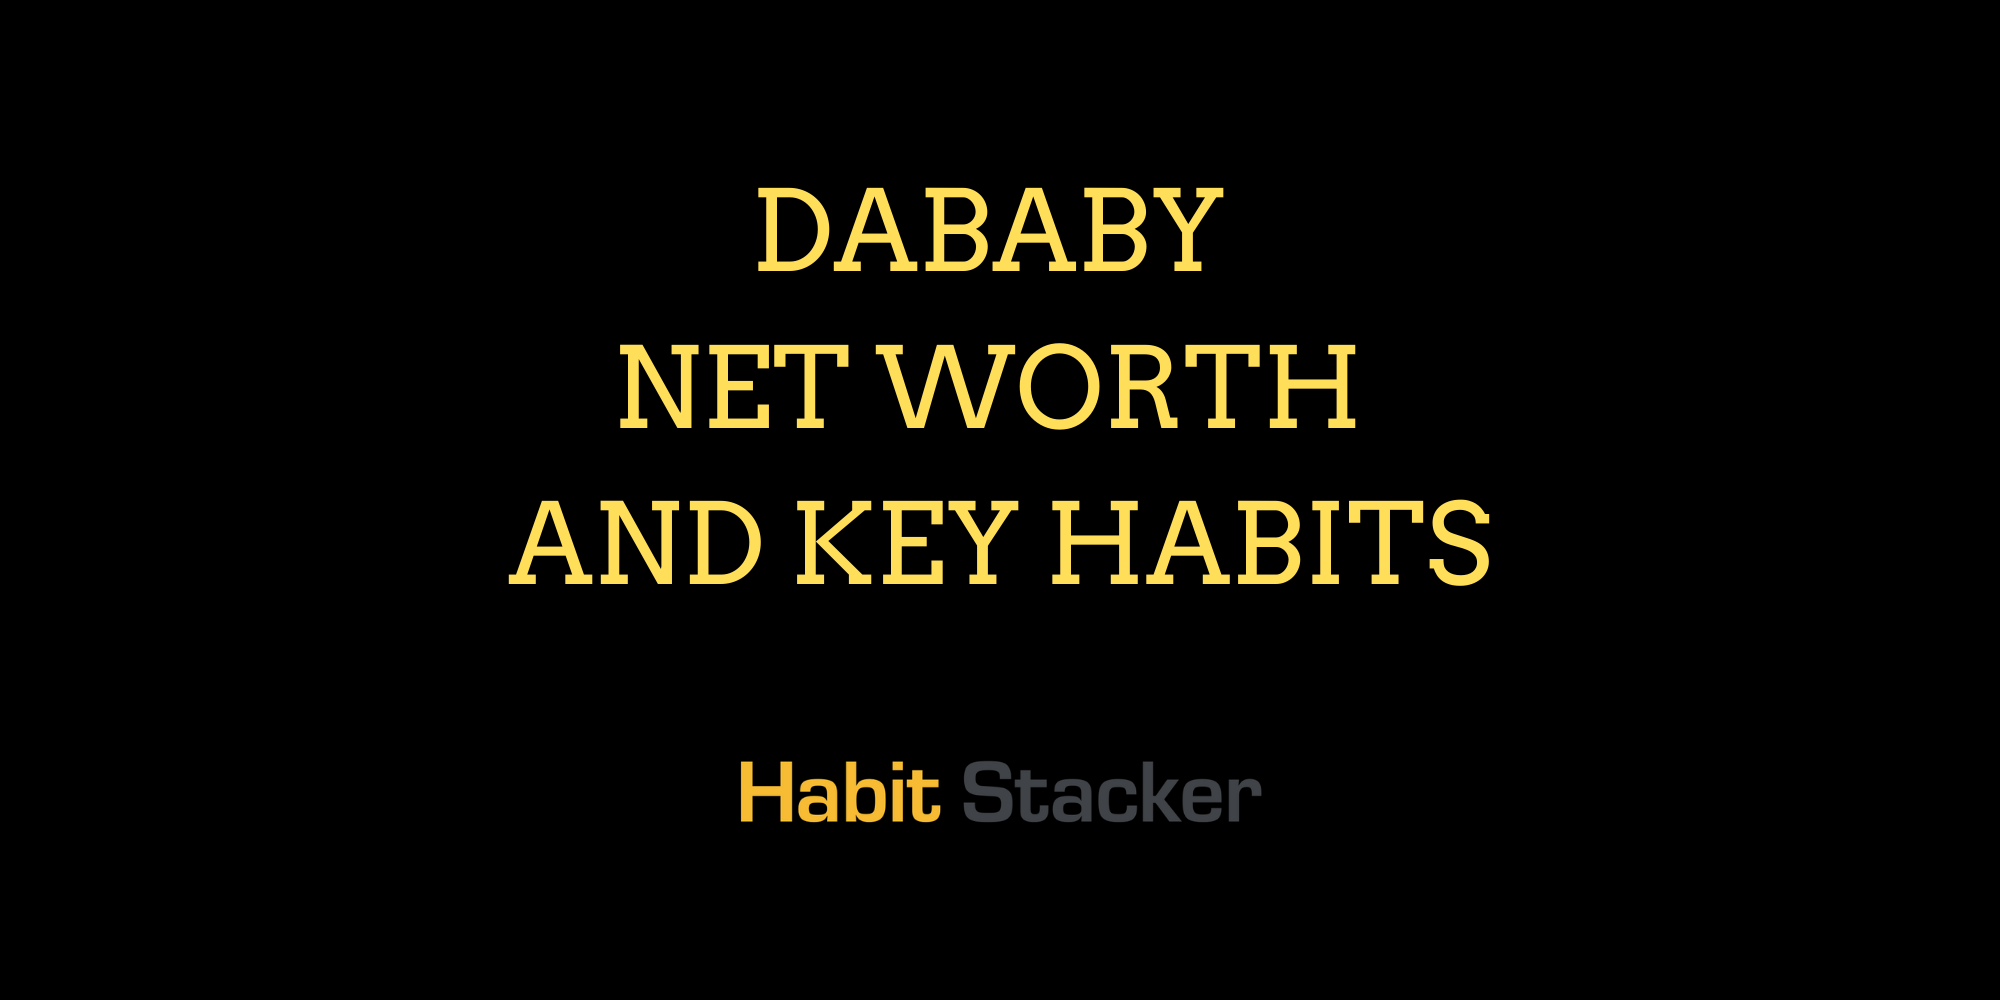 Dababy Net Worth and Key Habits